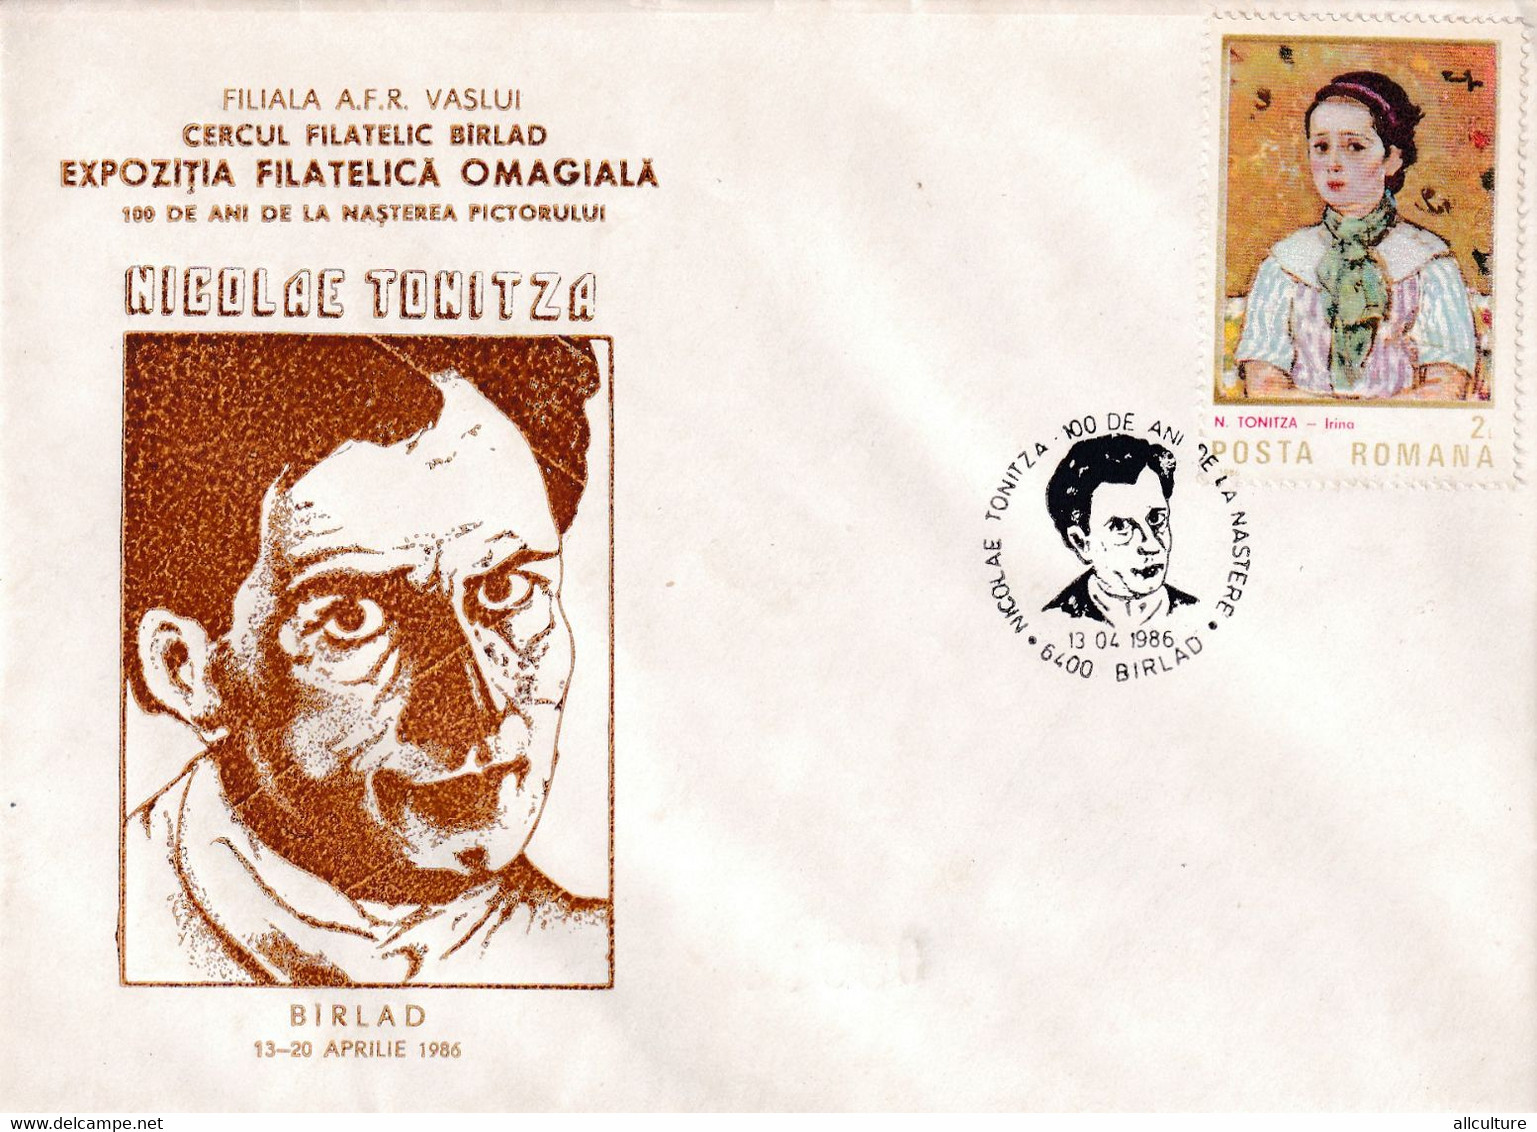 A2997 - Nicolae Tonitza, Pictor Roman, Expozitia Filatelica Omagiala, Vaslui Barlad 1986 Romania Posta Romana - Storia Postale